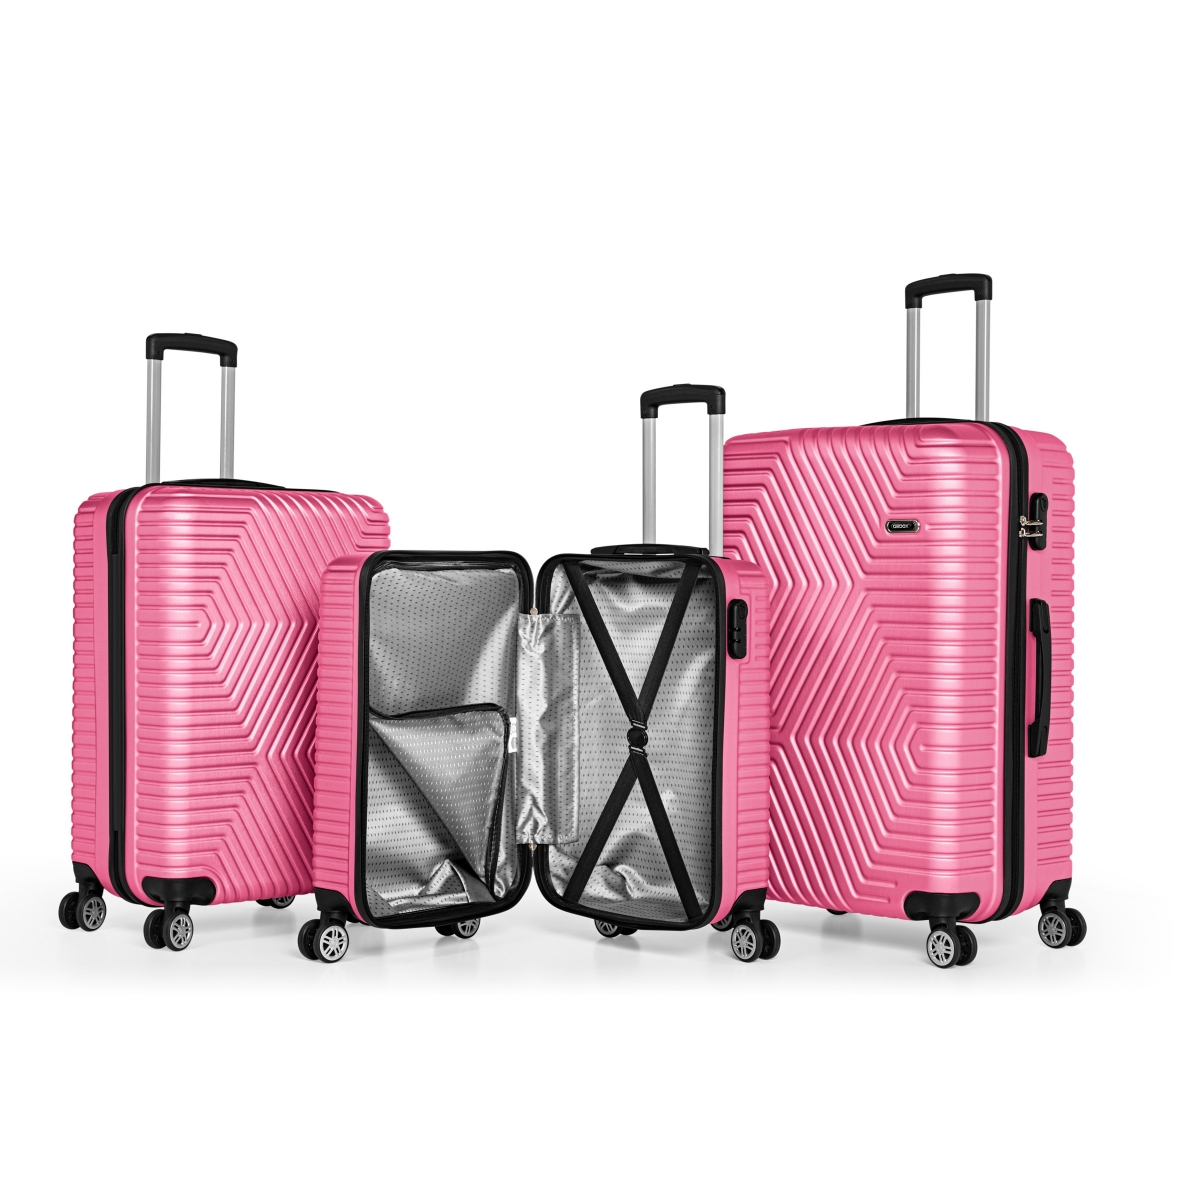 G&D Polo Suitcase ABS 3'lü Lüx Valiz Seyahat Seti - Model:600.11 Pudra Pembe